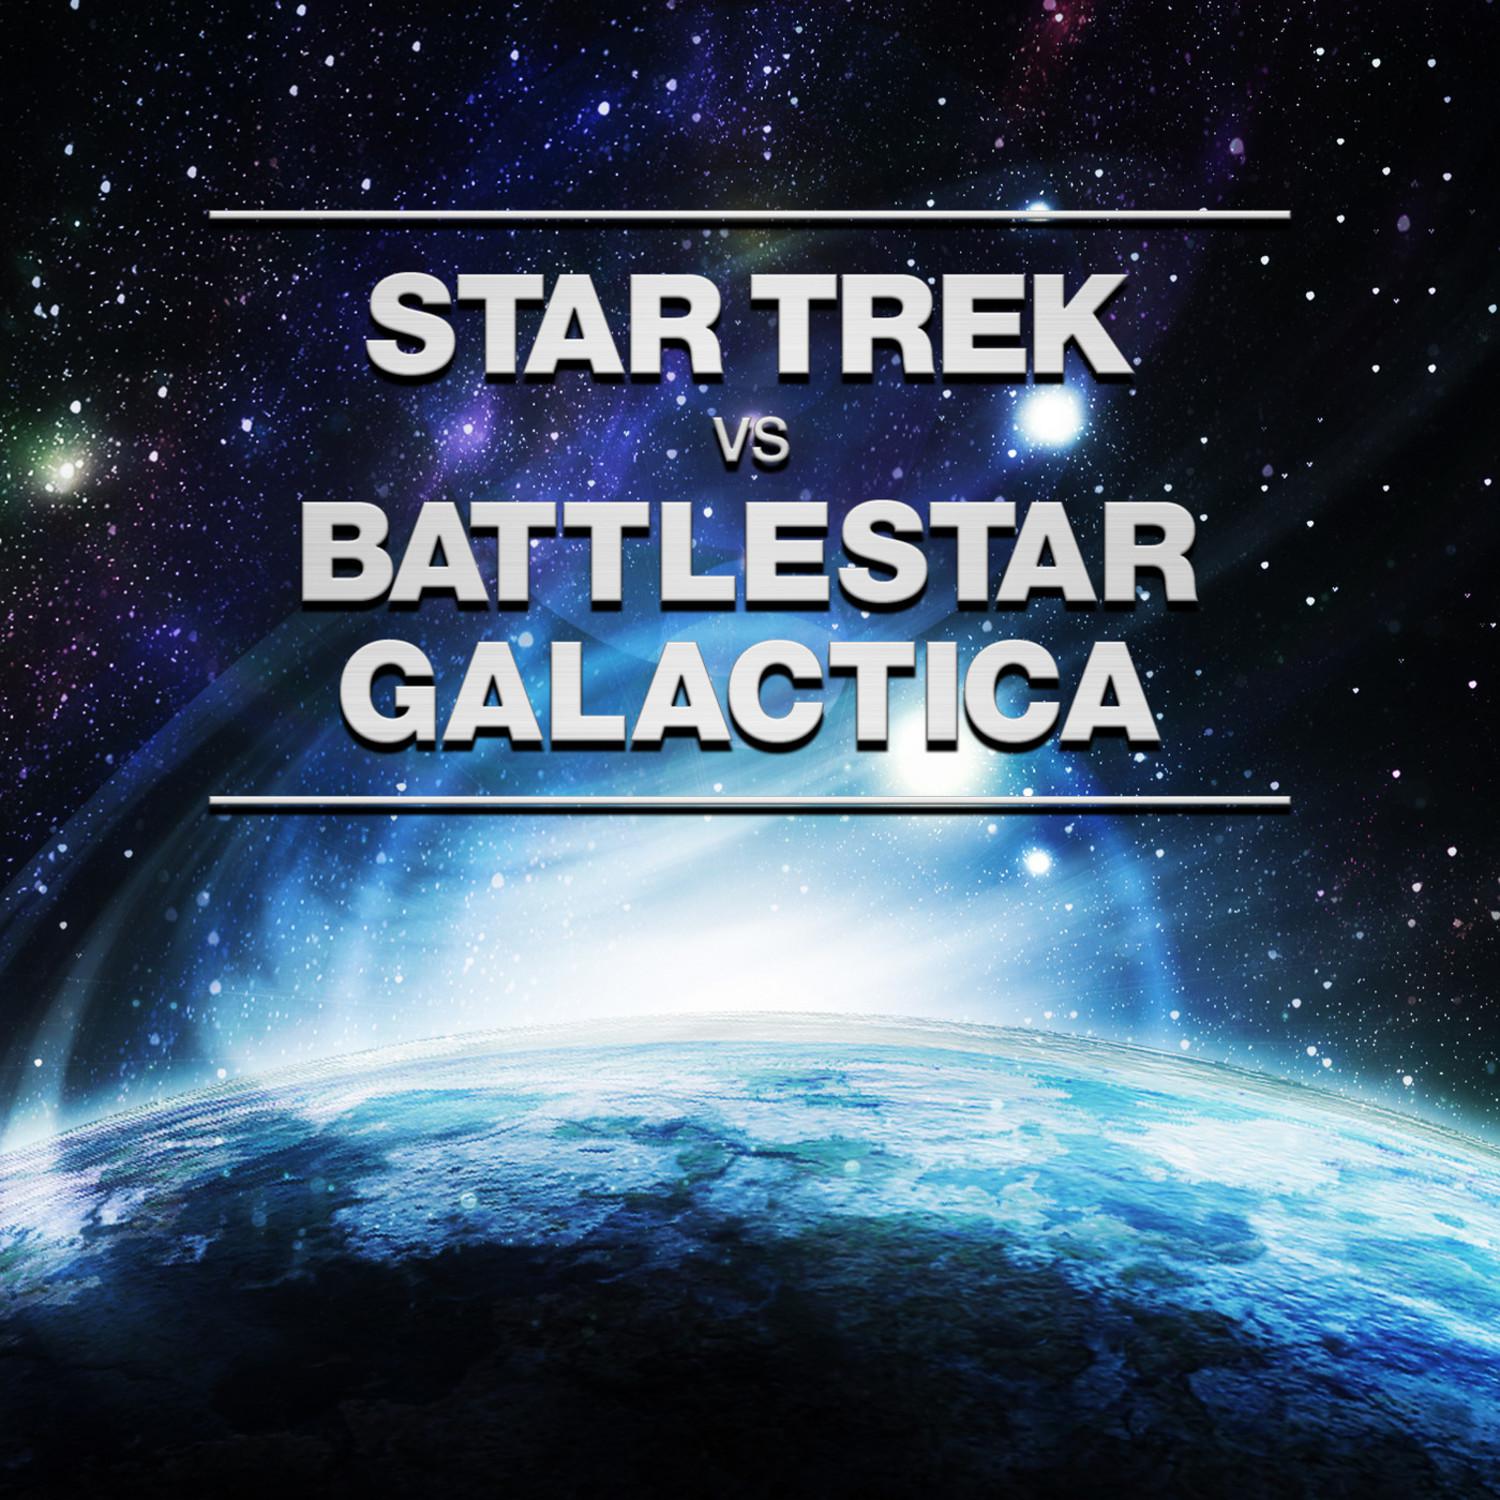 Battlestar Galactica: Adama's Theme